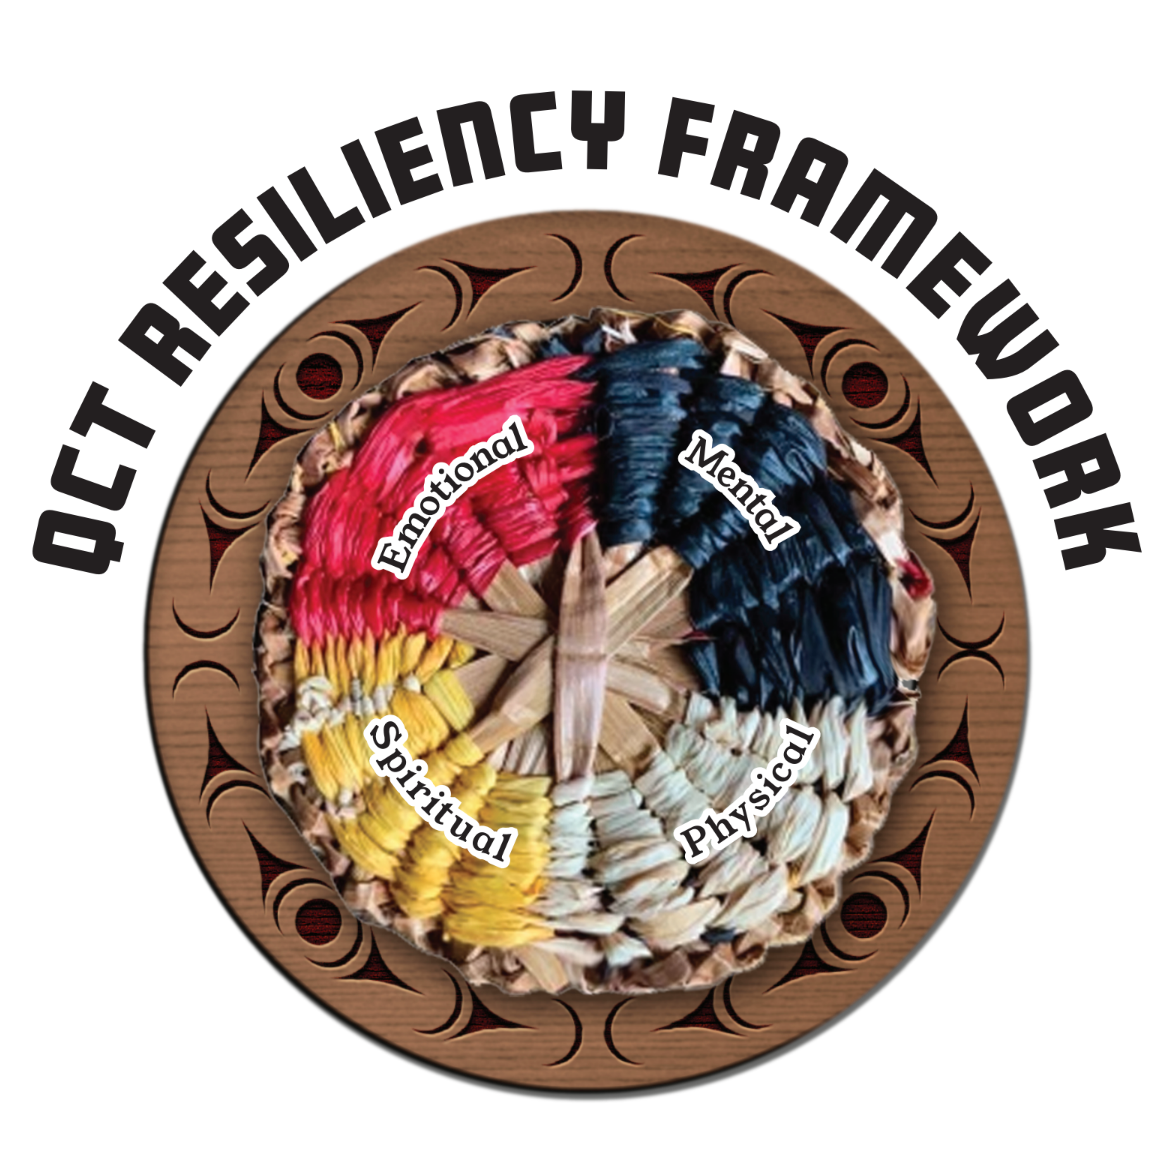 QCT Resiliency Framework